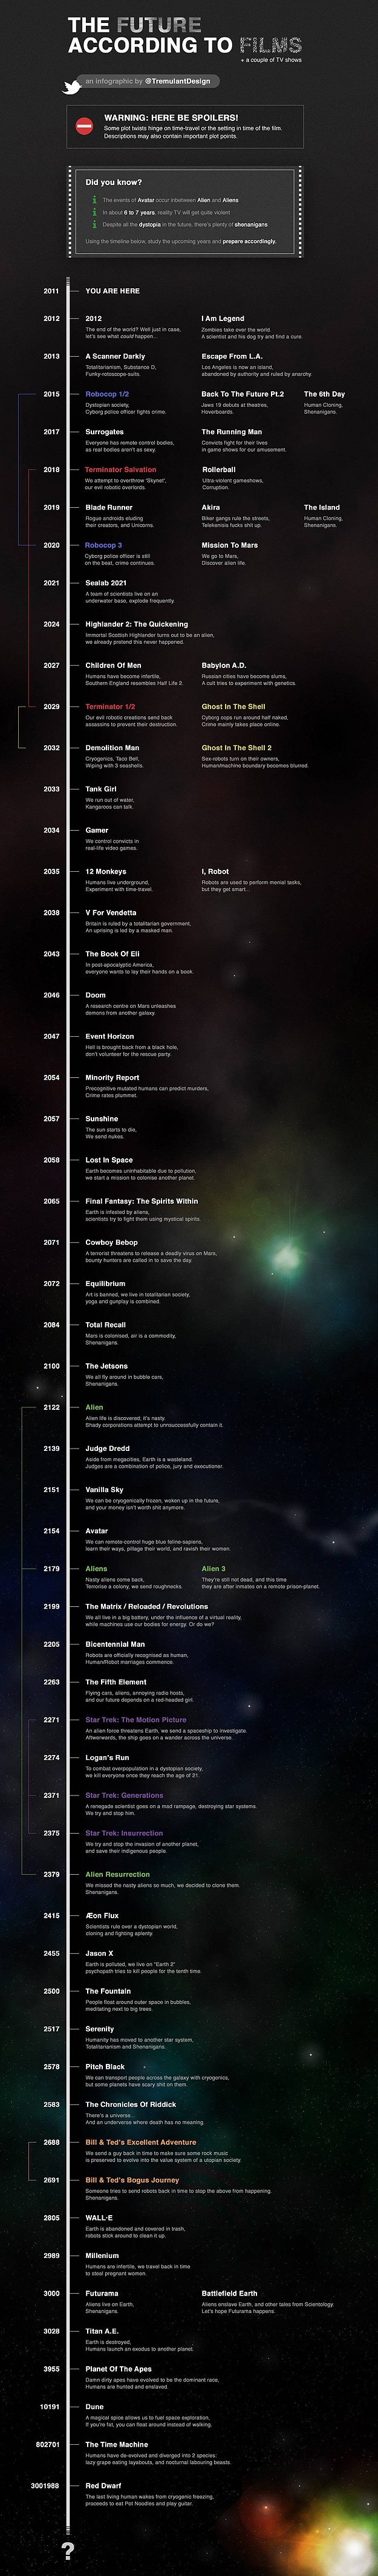 Science Fiction Film Timeline Chart